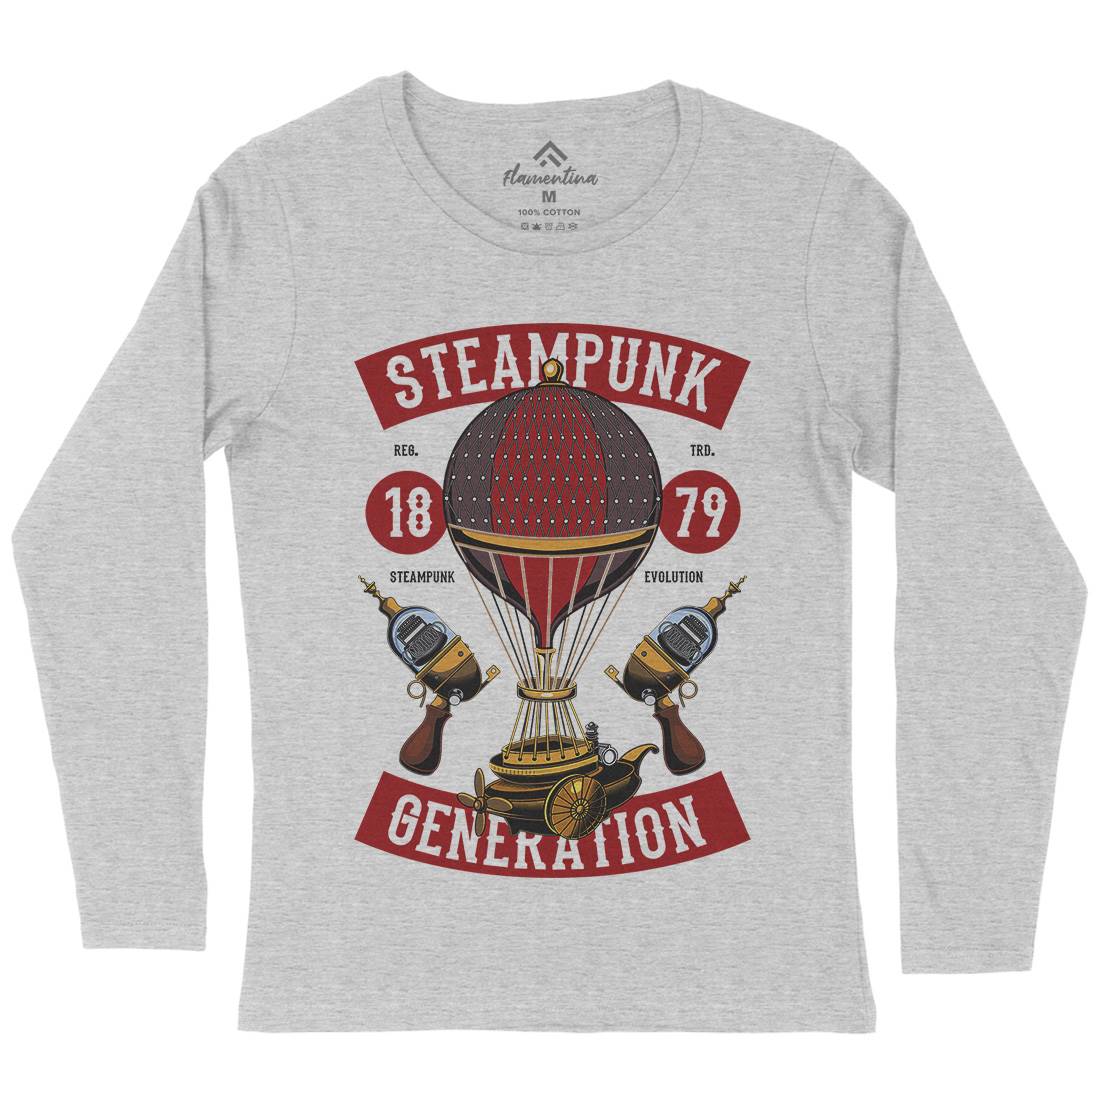 Generation Womens Long Sleeve T-Shirt Steampunk C449